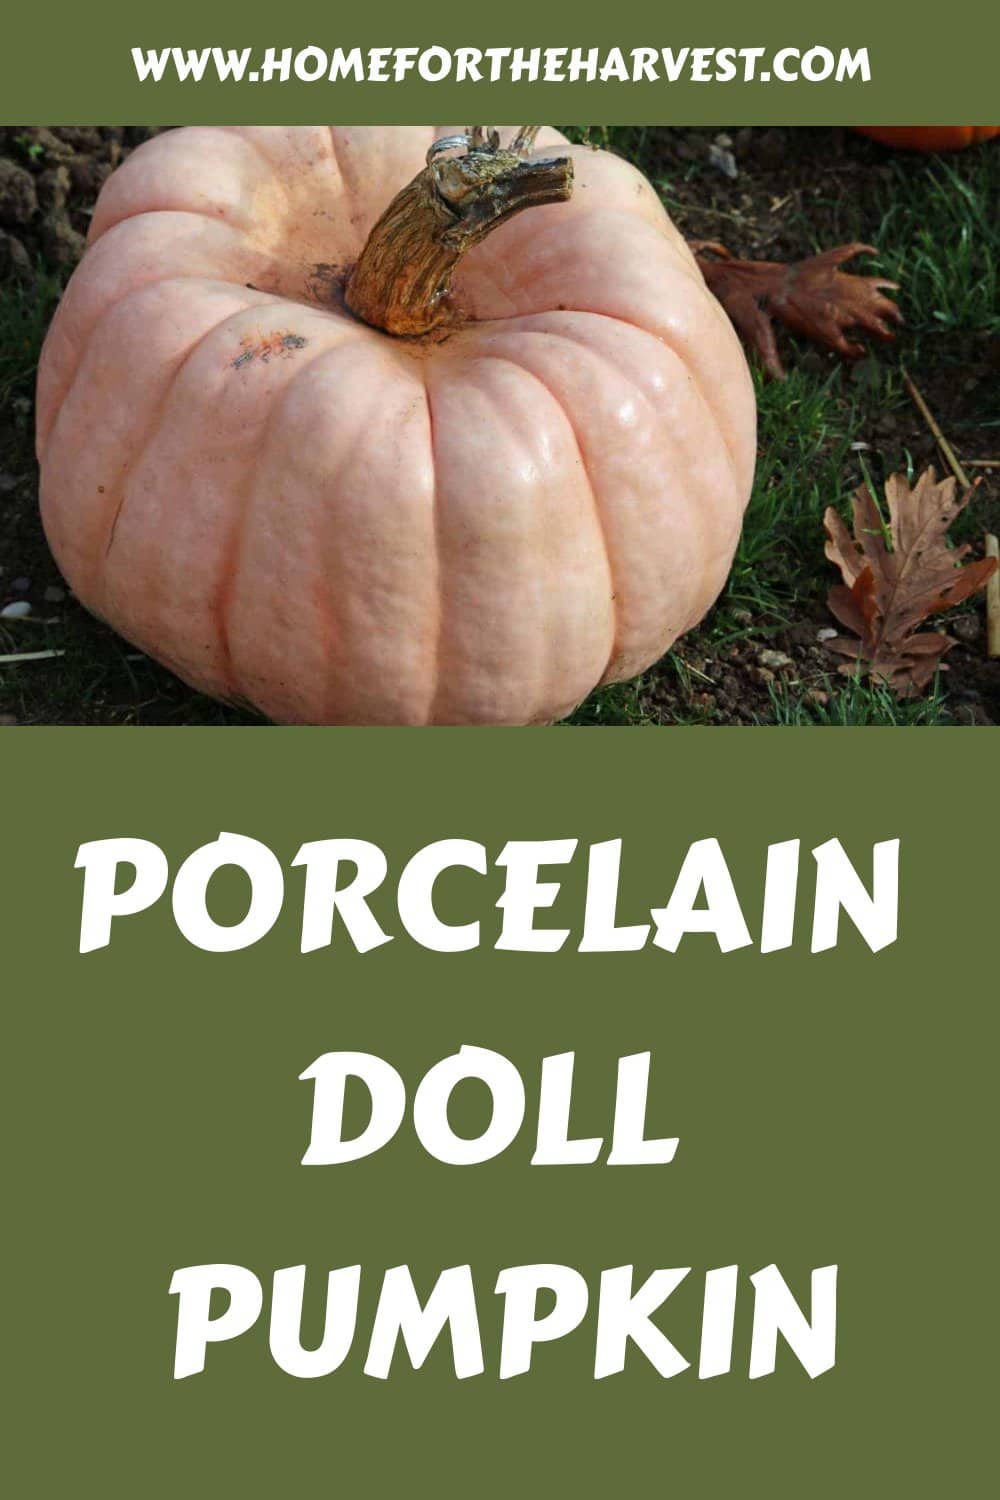 Porcelain doll pumpkin generated pin 19406